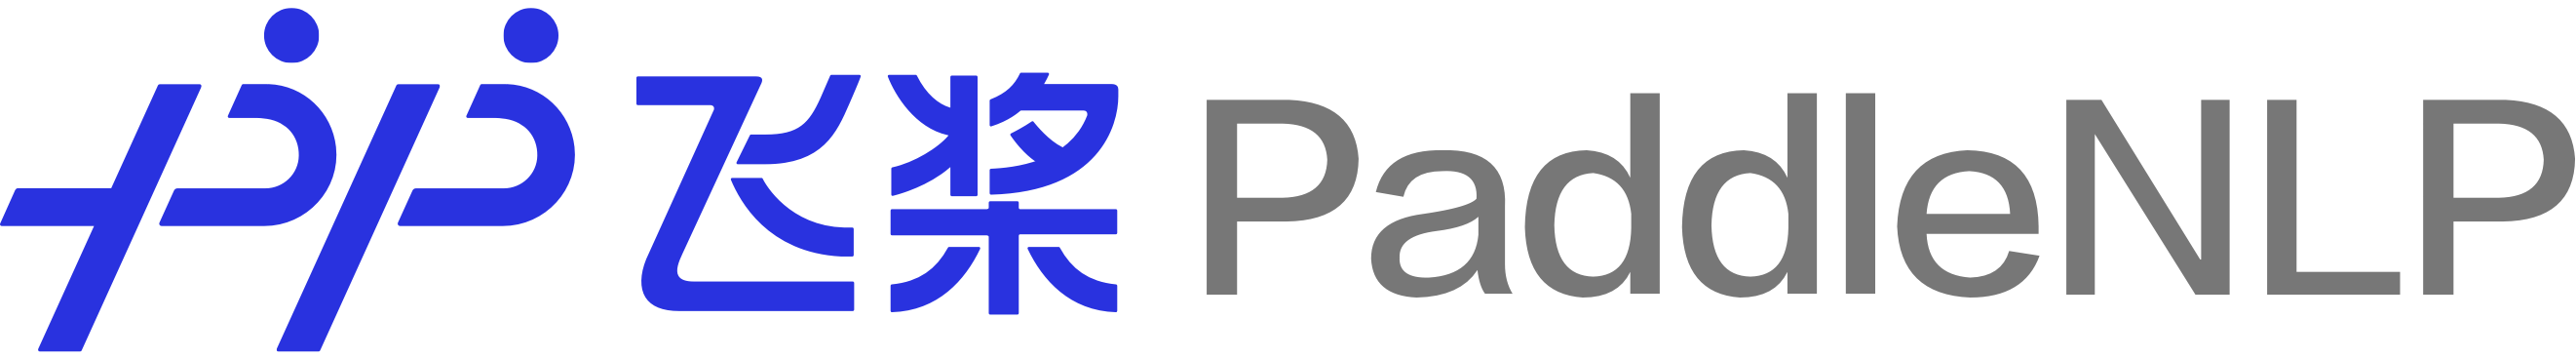 PaddleNLP-logo.png